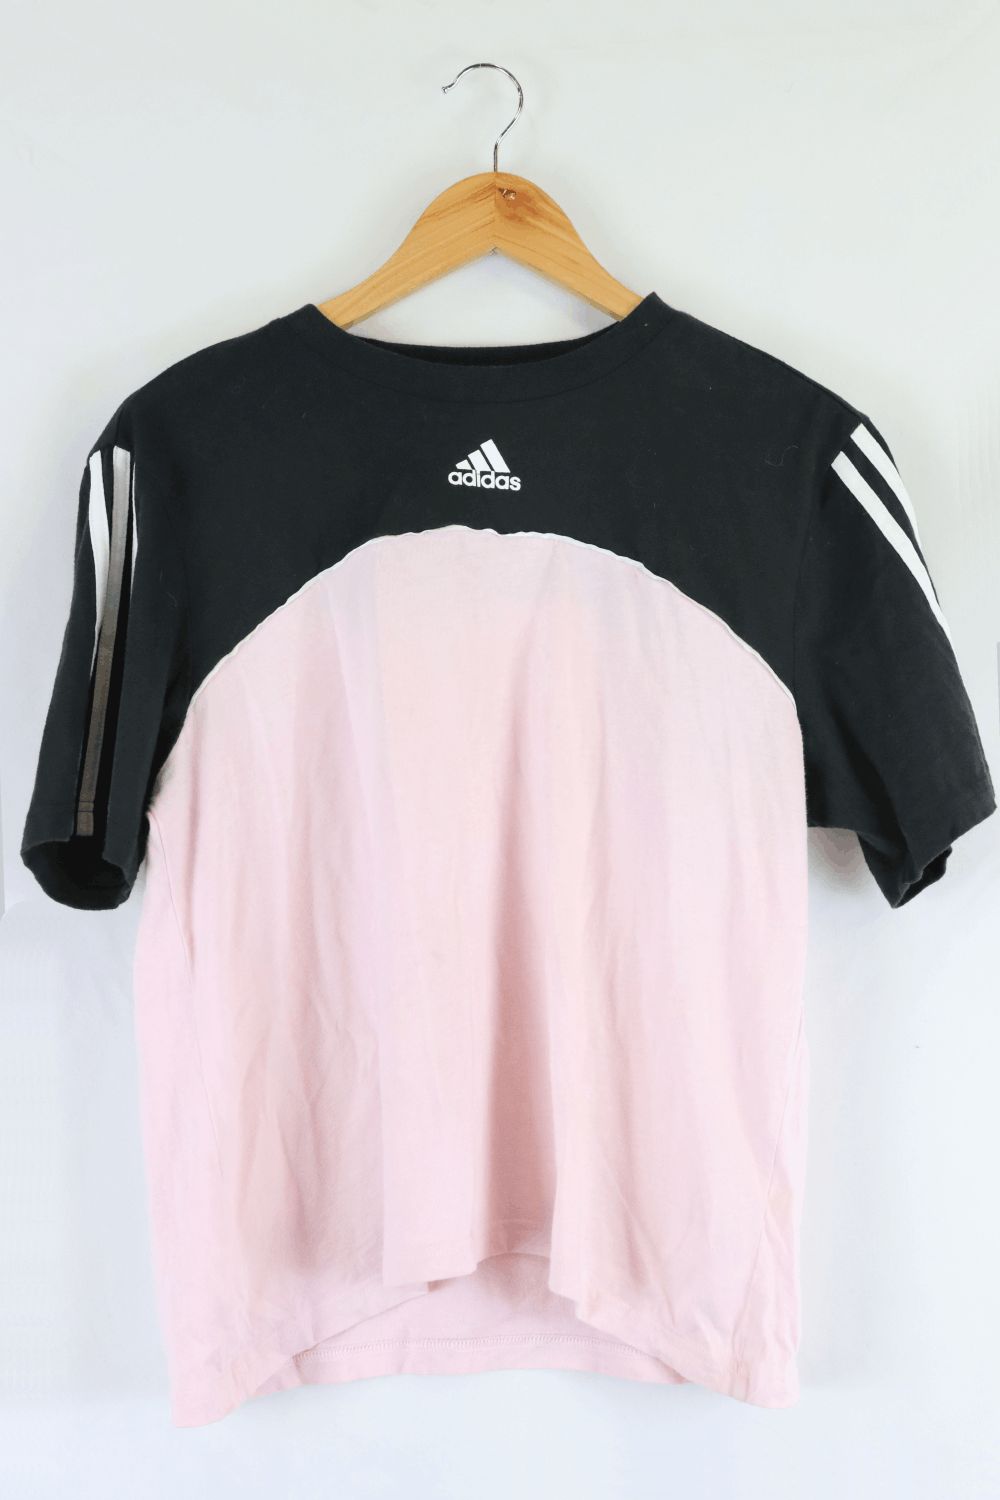 Adidas Black And Pink T-shirt S